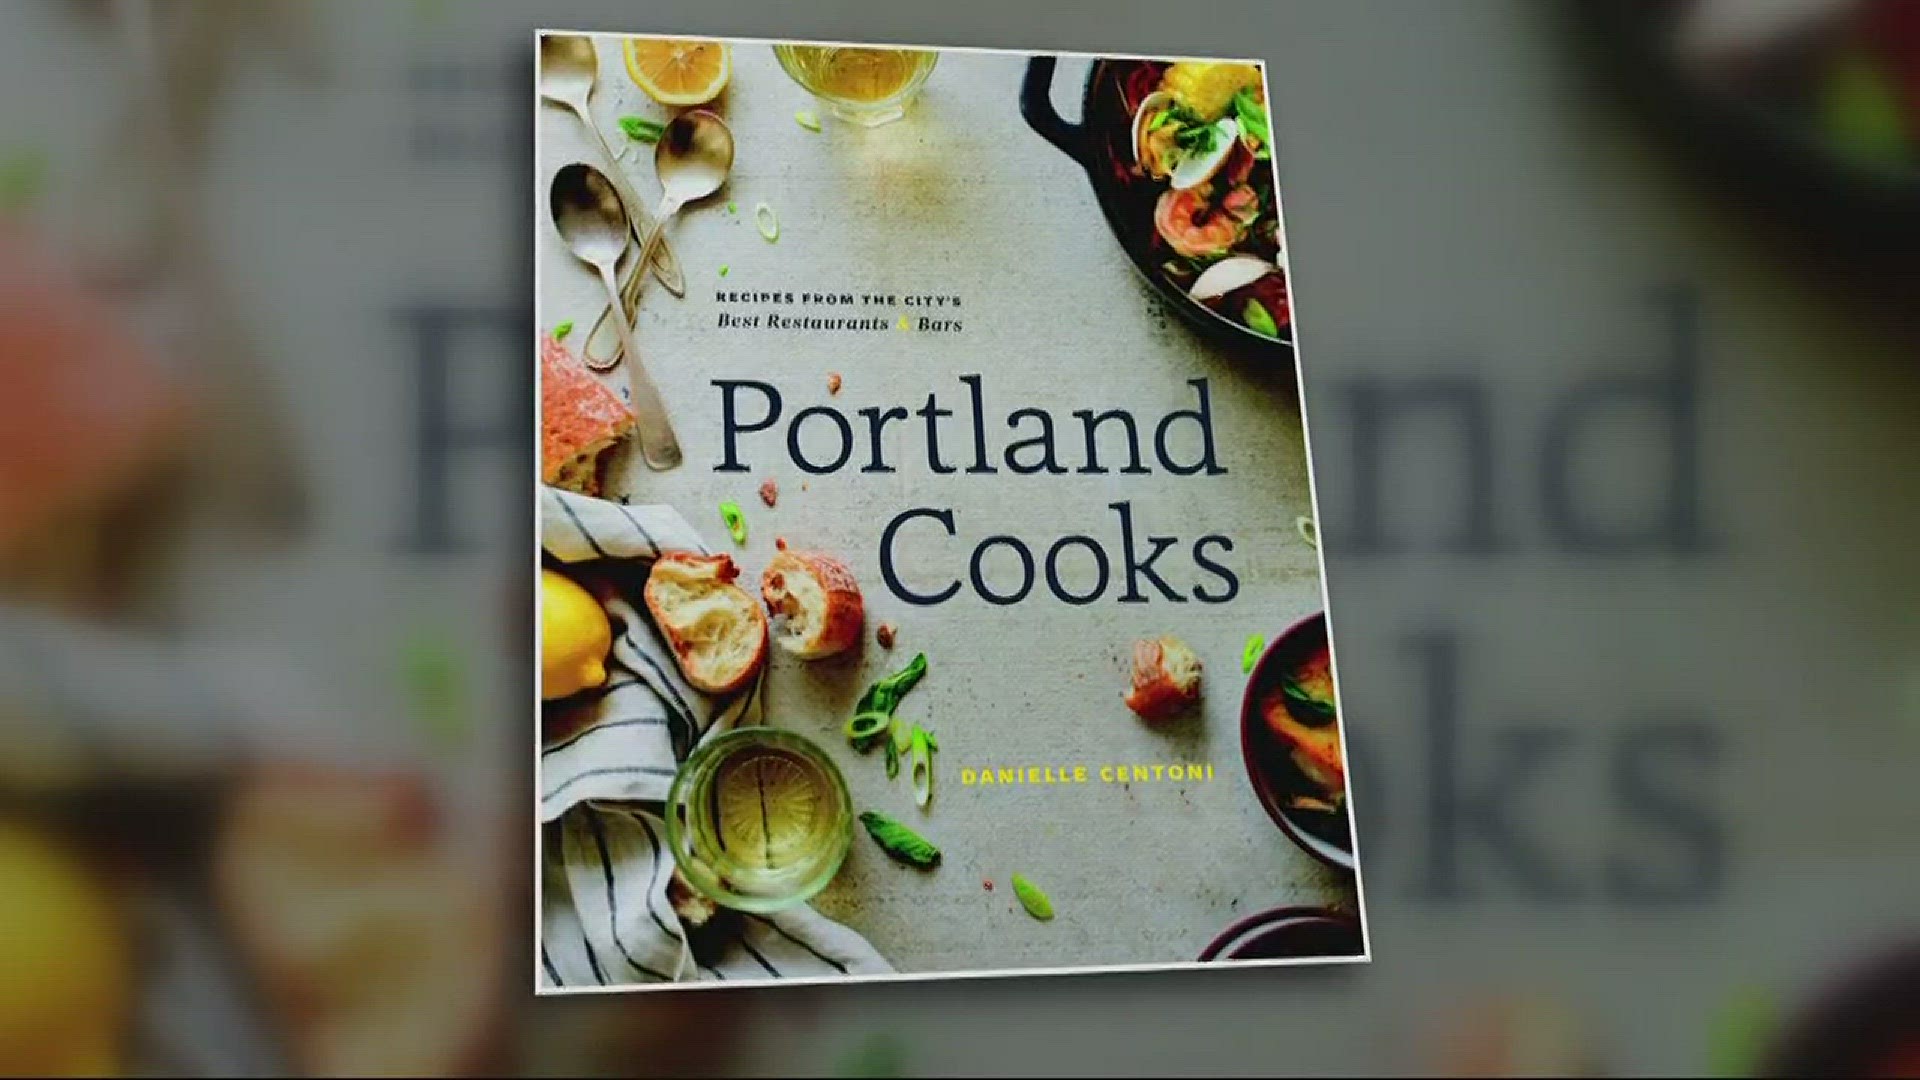 'Portland Cooks' cookbook launch party